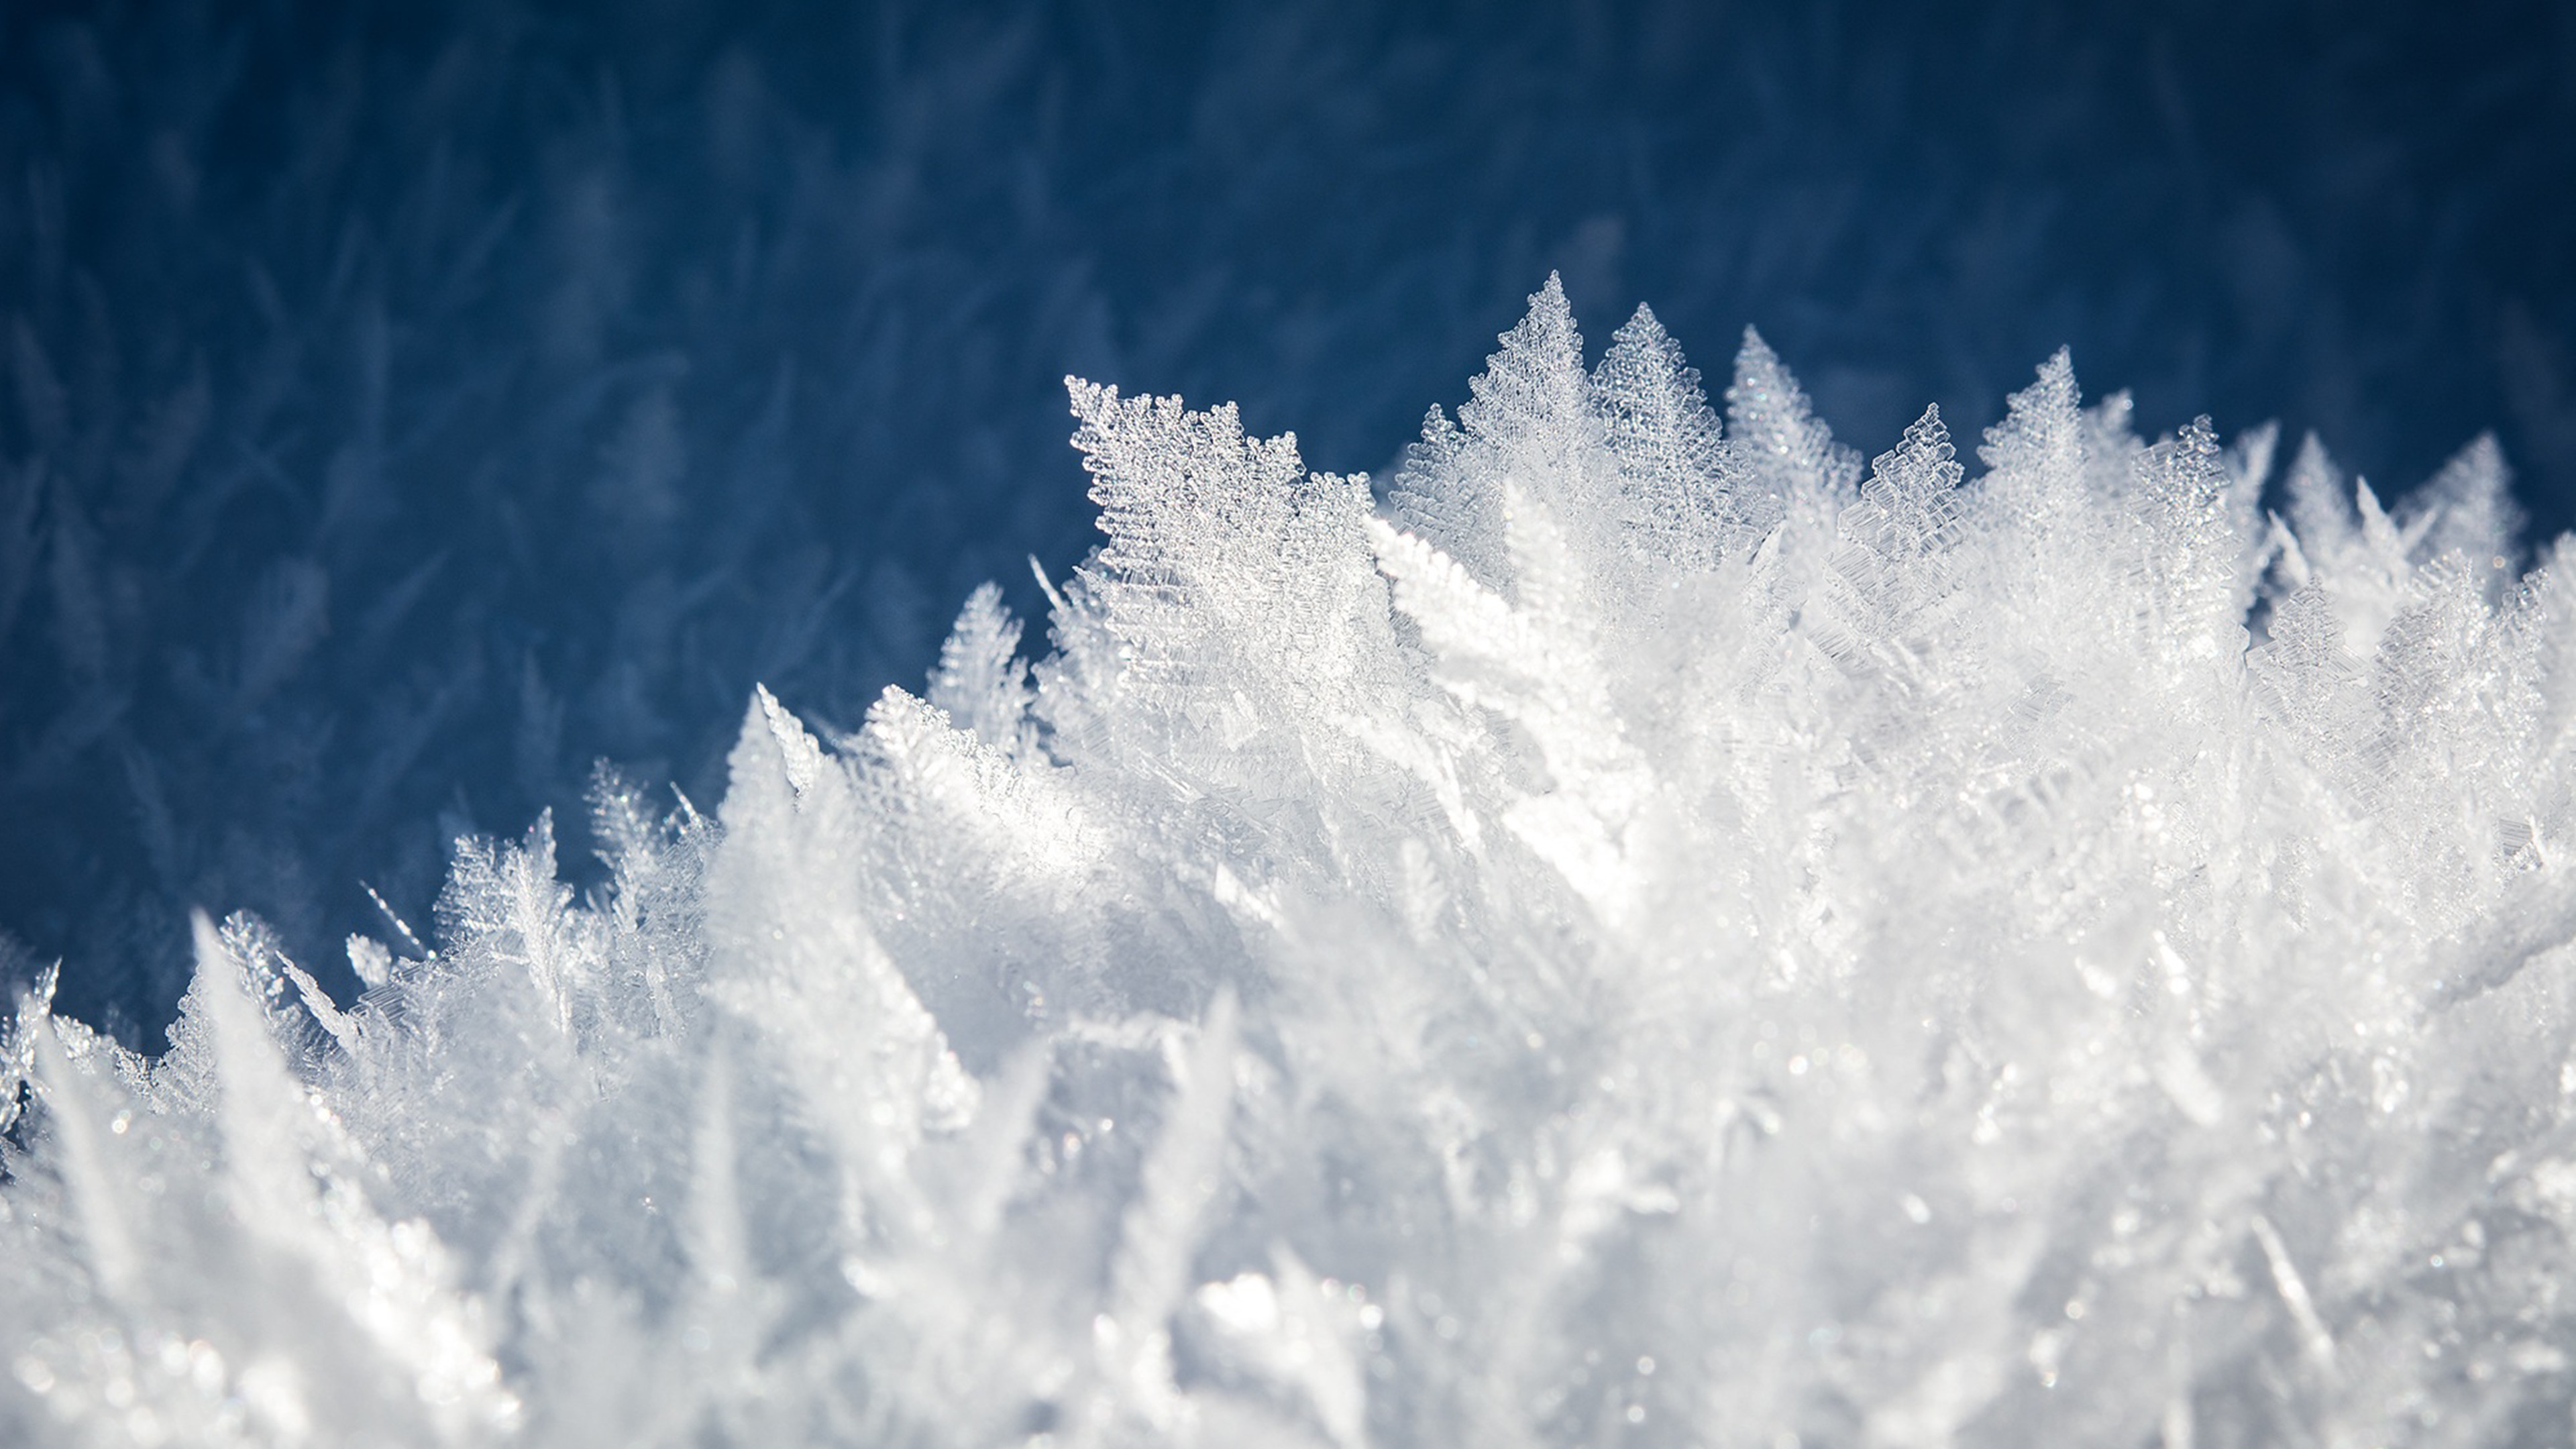 3840x2160 Ice Crystals 4K Wallpaper Download Ice Crystals 4K Wallpaper Download